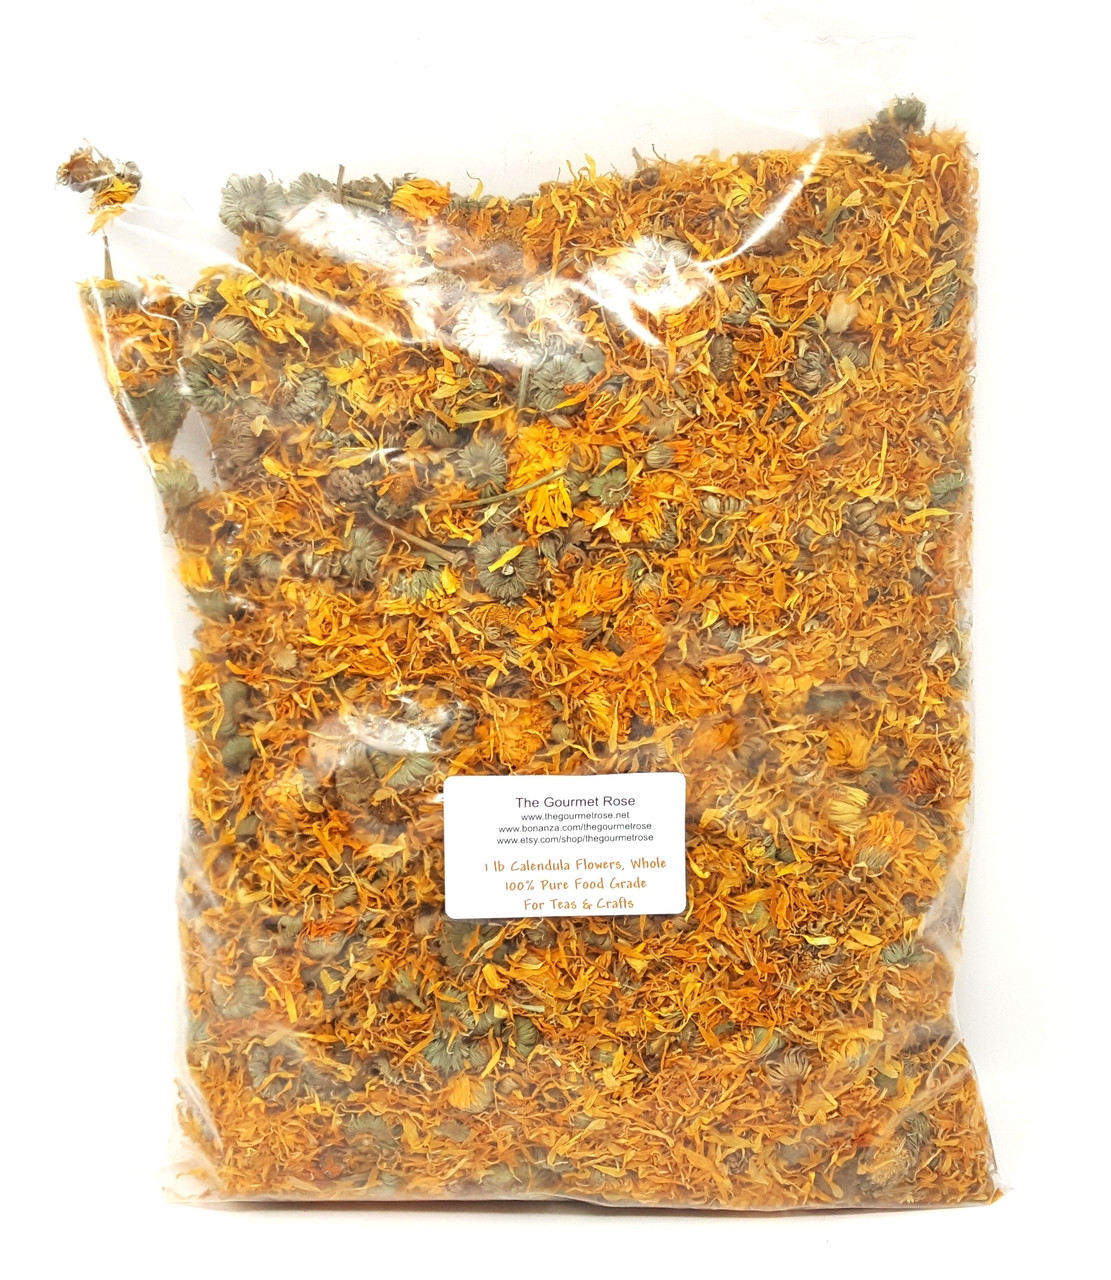 Calendula Flower Tea, 100% Natural Herbal Tea, Dried Marigold - Calendula  Officinalis